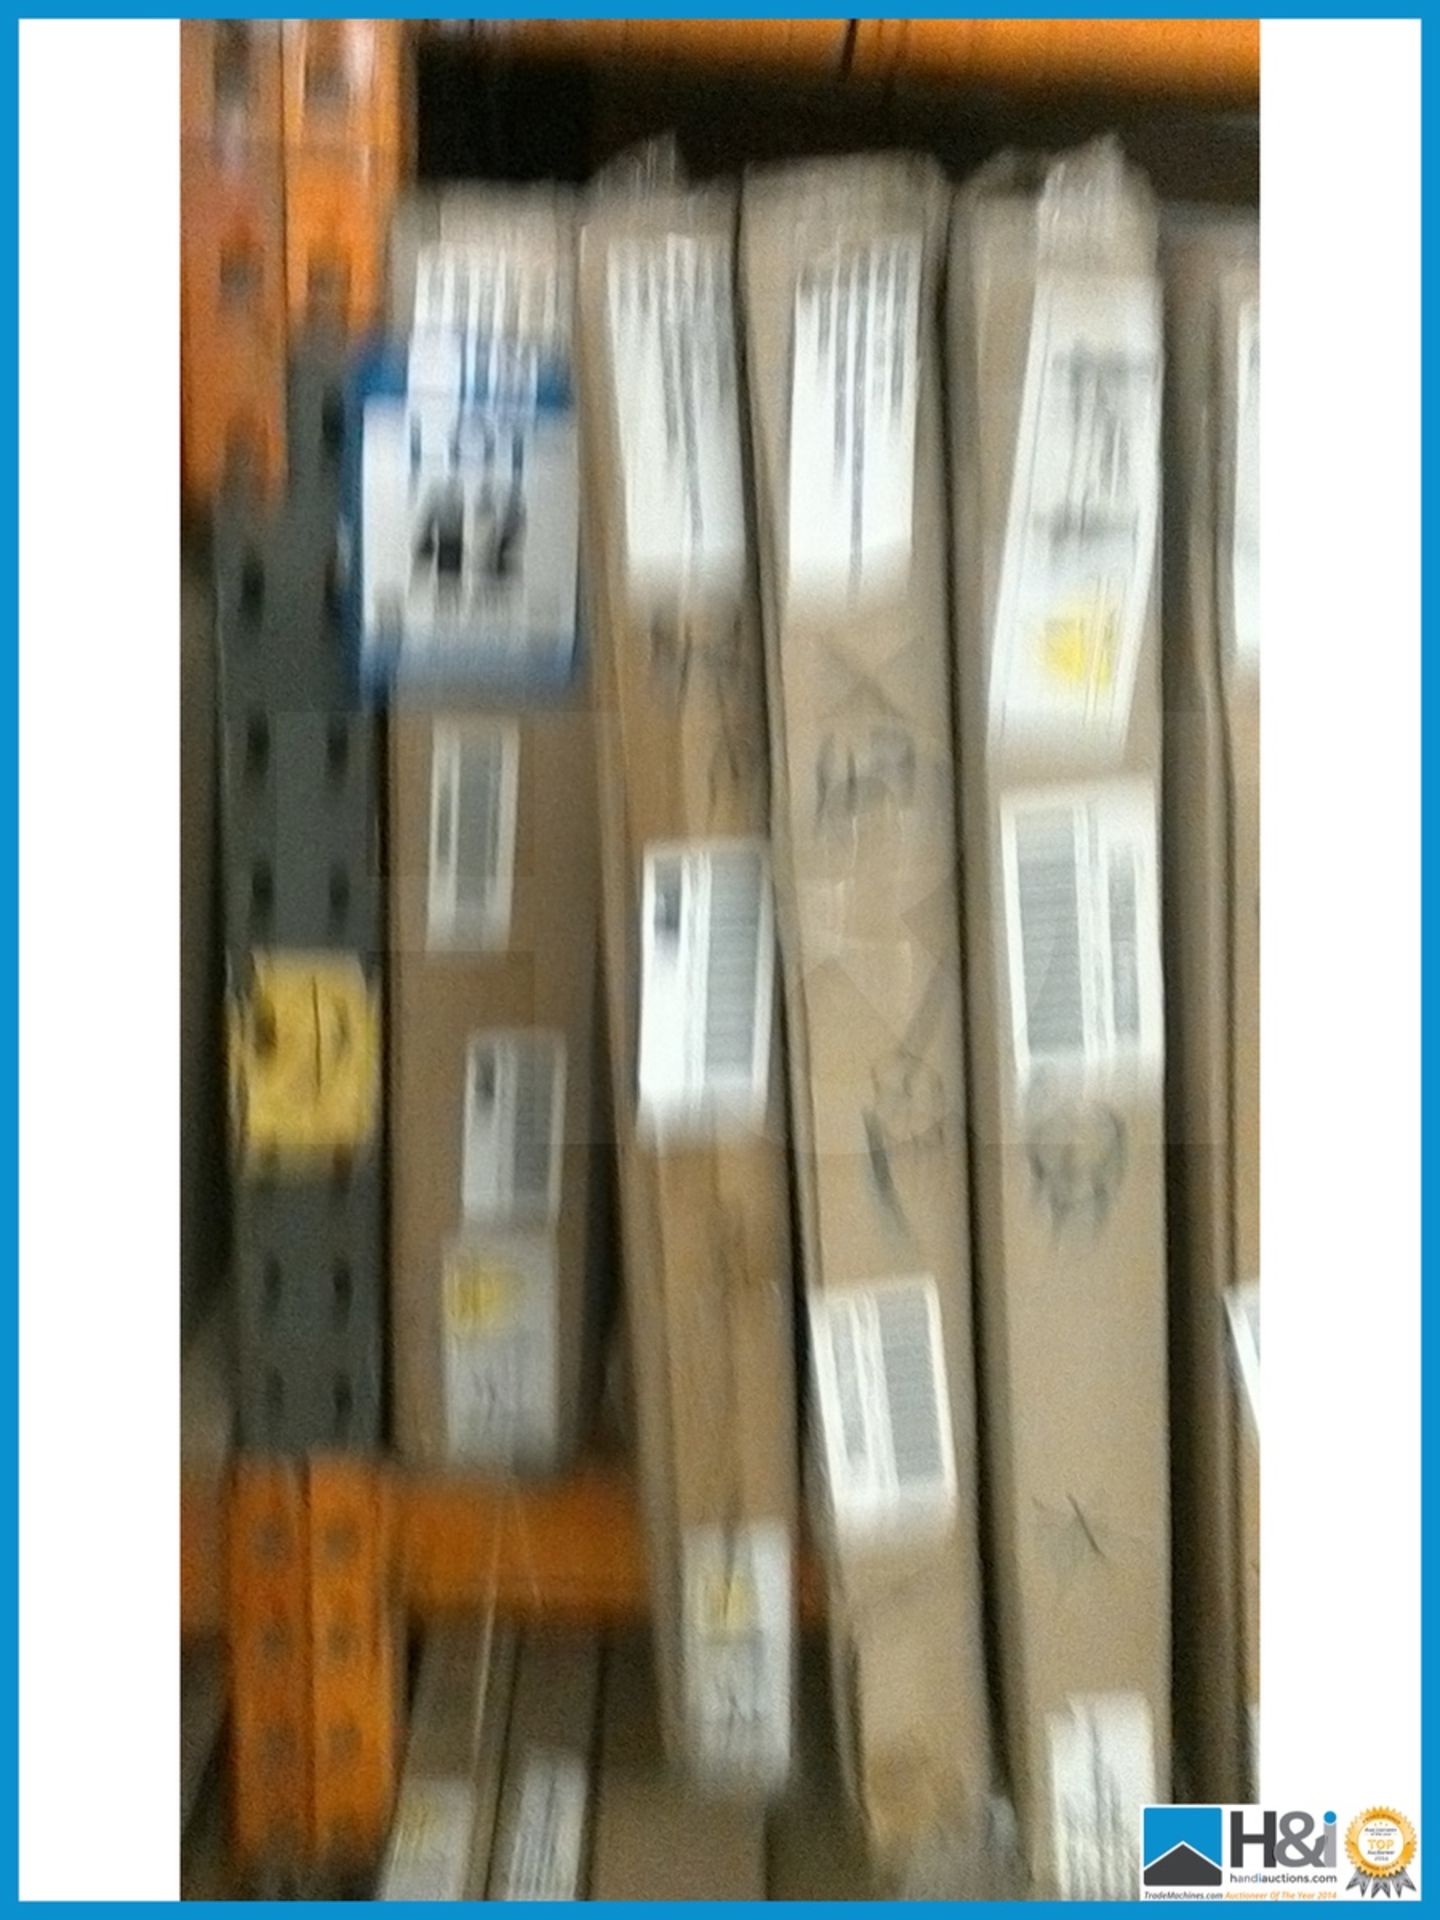 NEW IN BOX PRAGUE 2DOOR SLIDER WARDROBE [WHITE] 199 x 123 x 62cm RRP £376 Appraisal: Viewing - Image 2 of 3